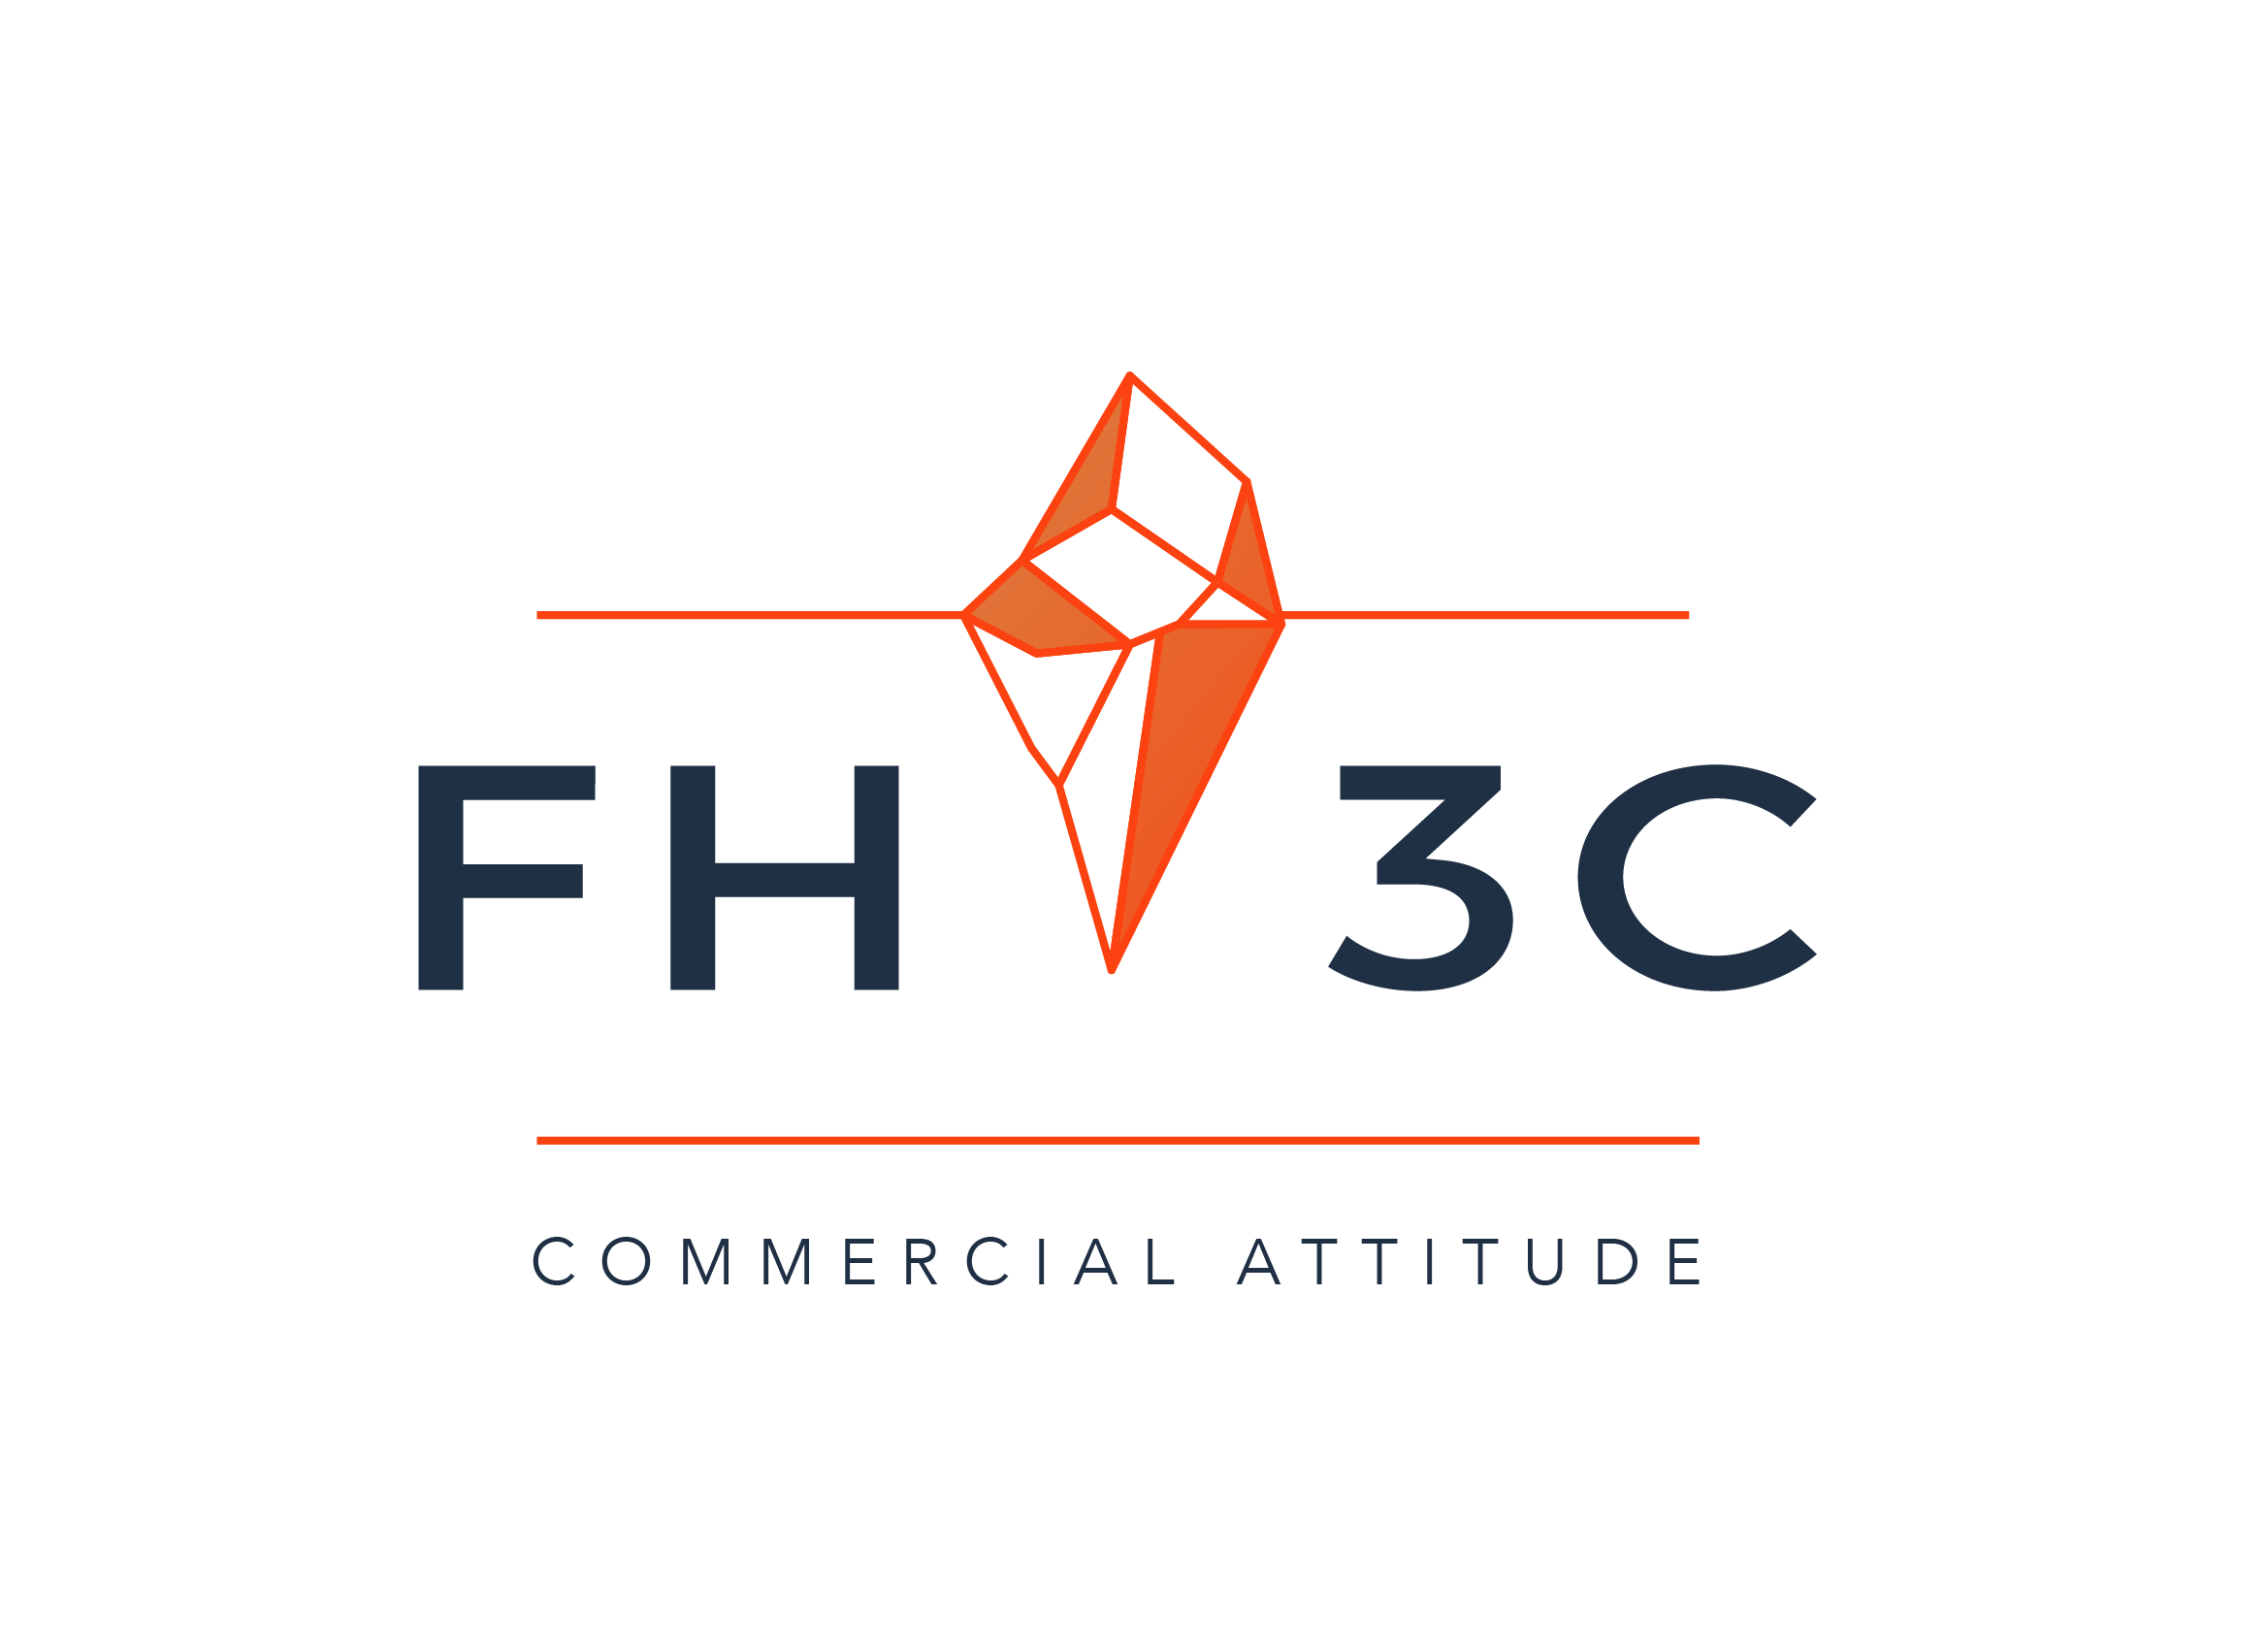 FH3C attitude